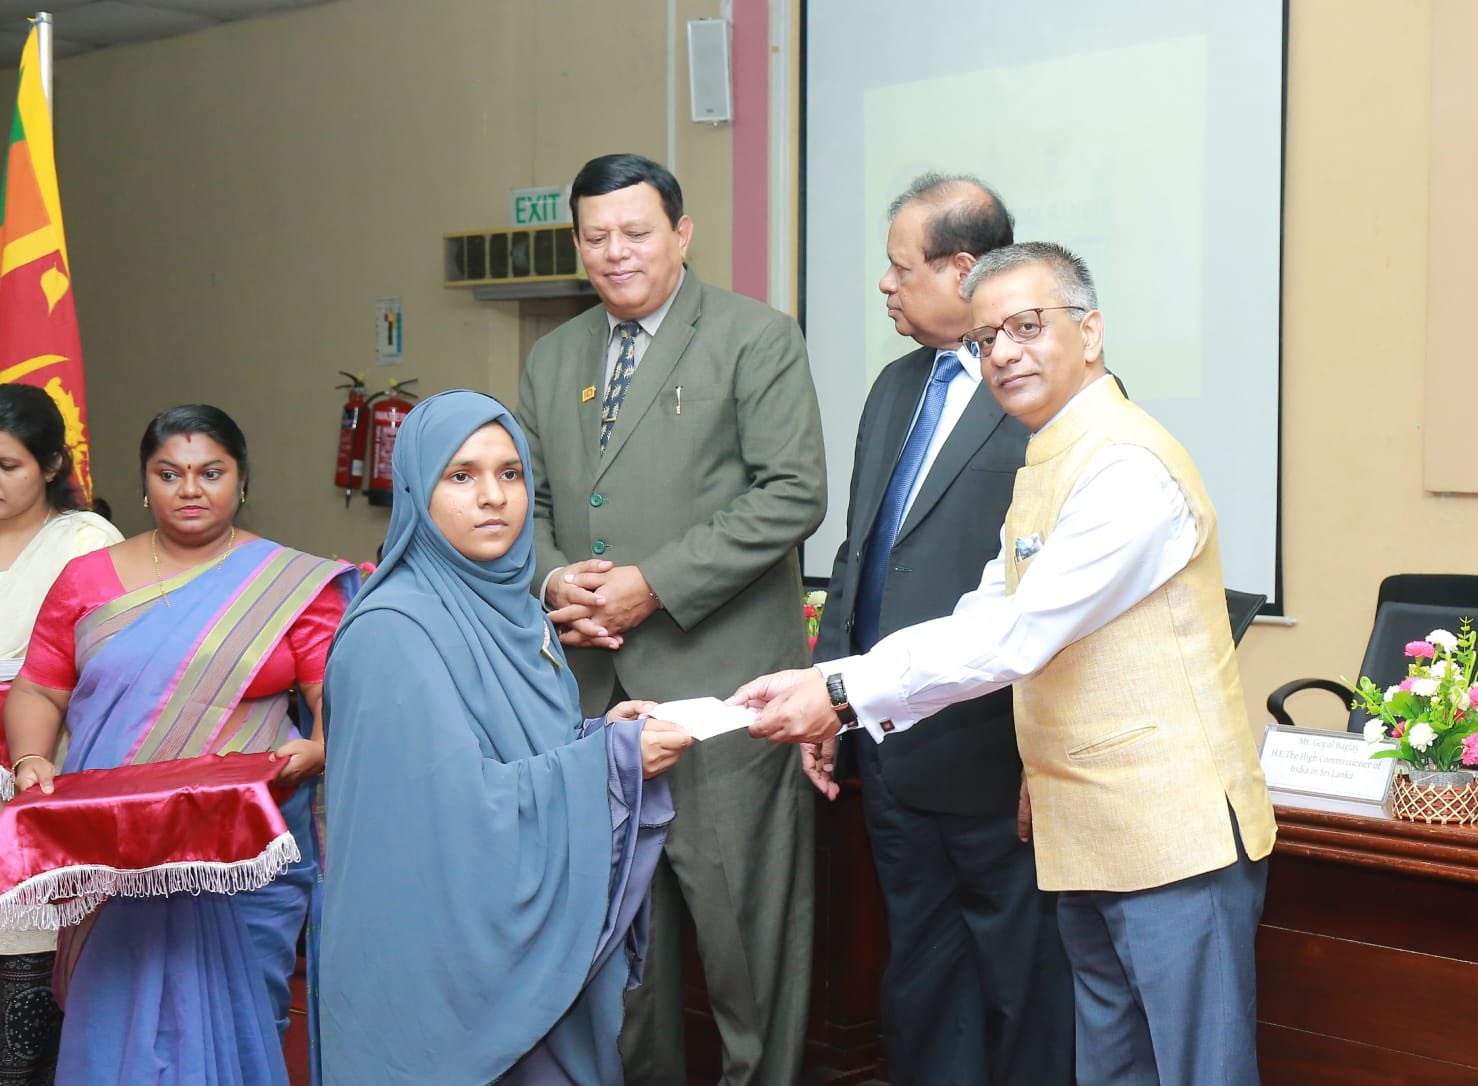 Mahatma Gandhi Scholarships awarded to 300 students across Sri Lanka